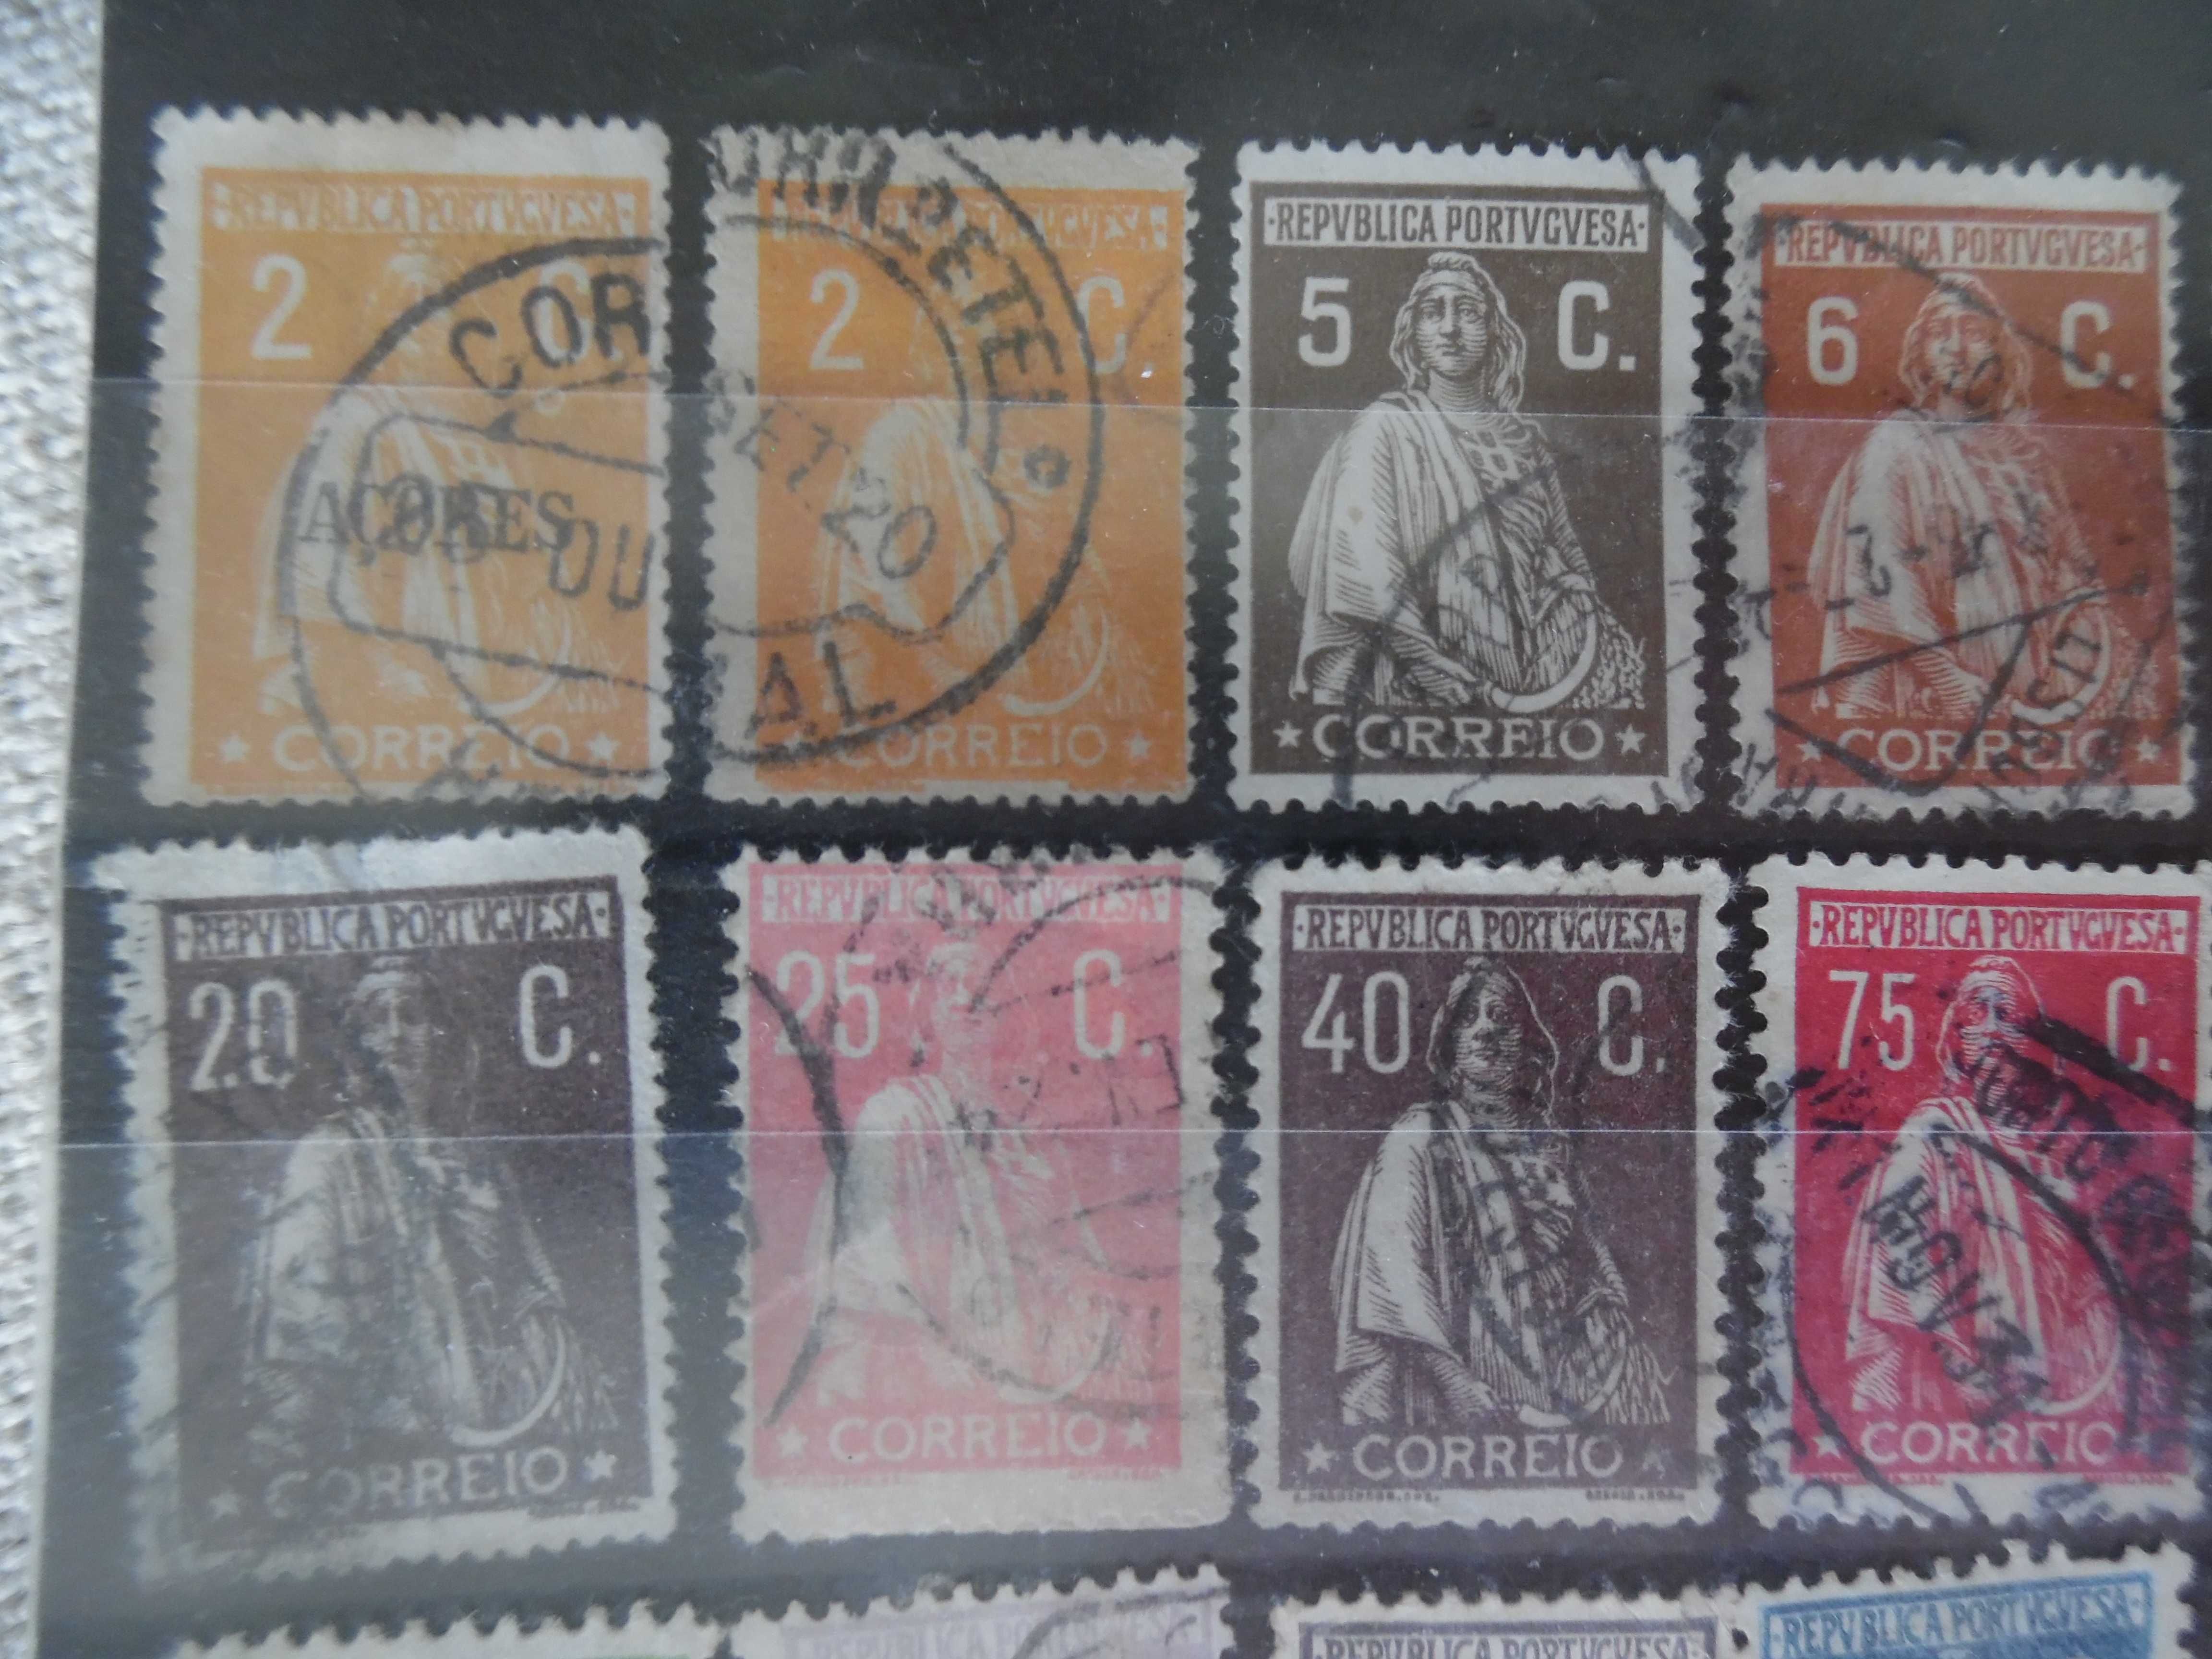 Selos Portugal 1912/1930-Lote Ceres c/ bons valores filatélicos